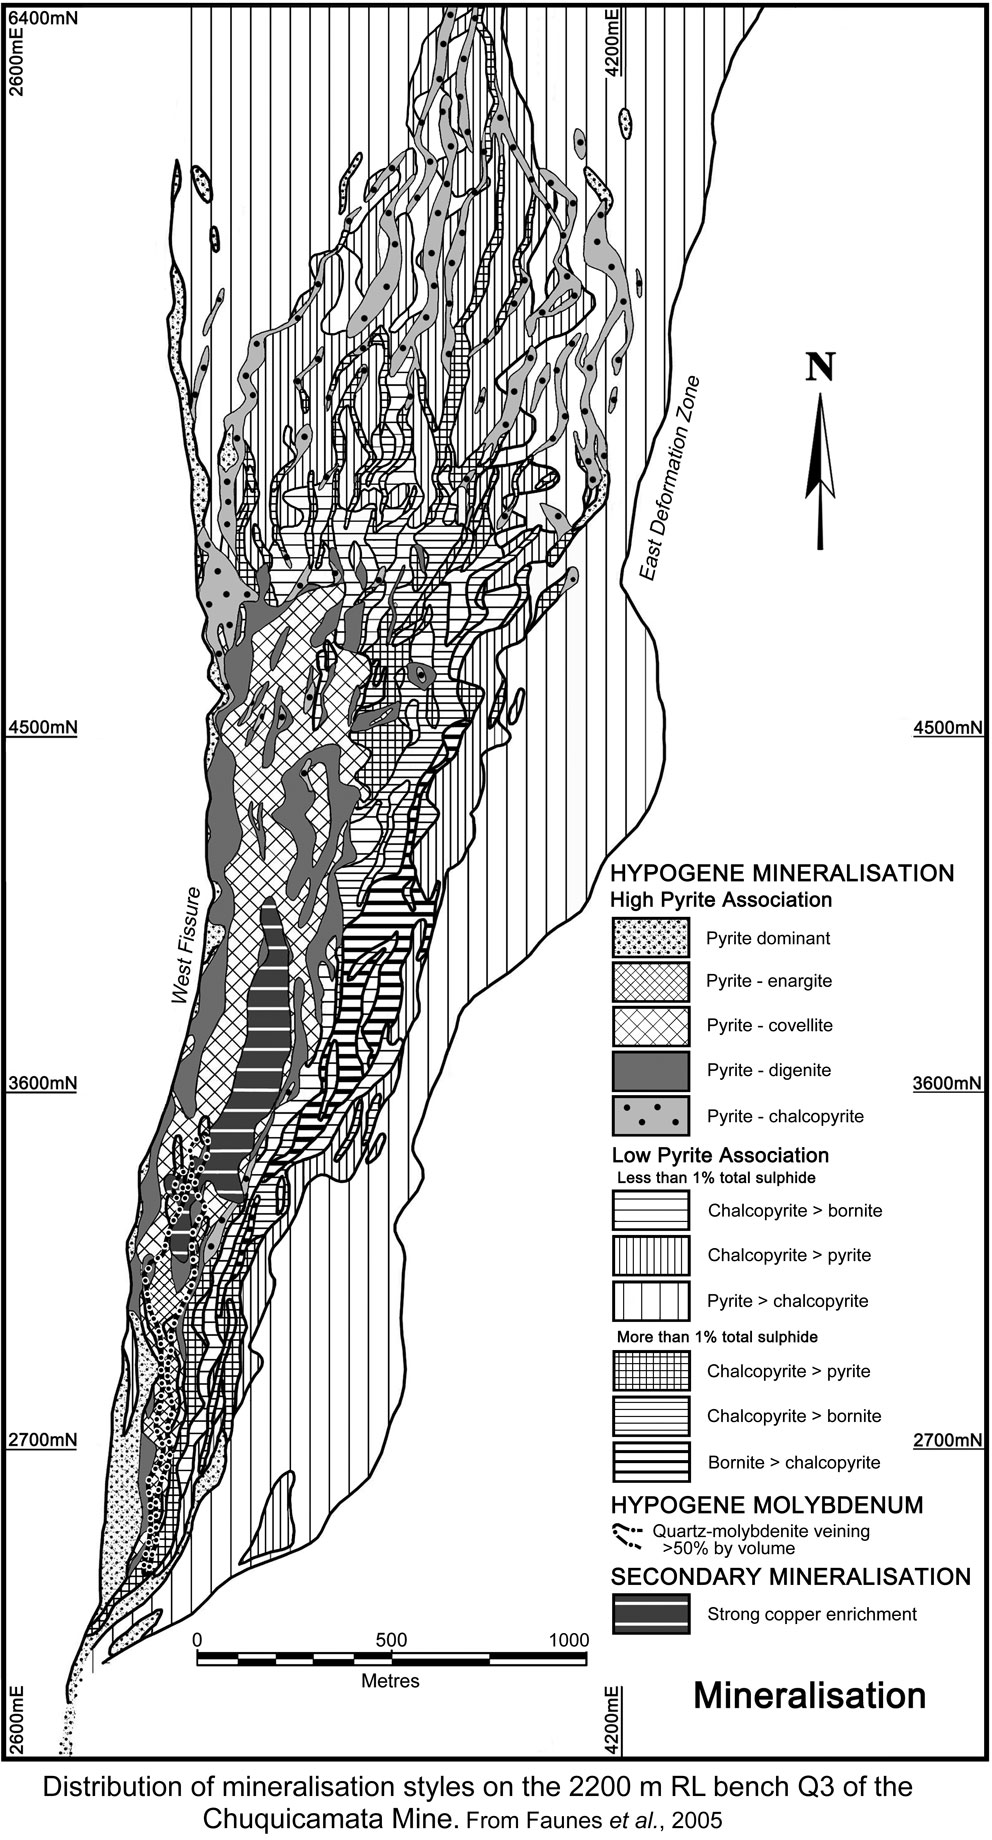 Chuquicamata mineralisation